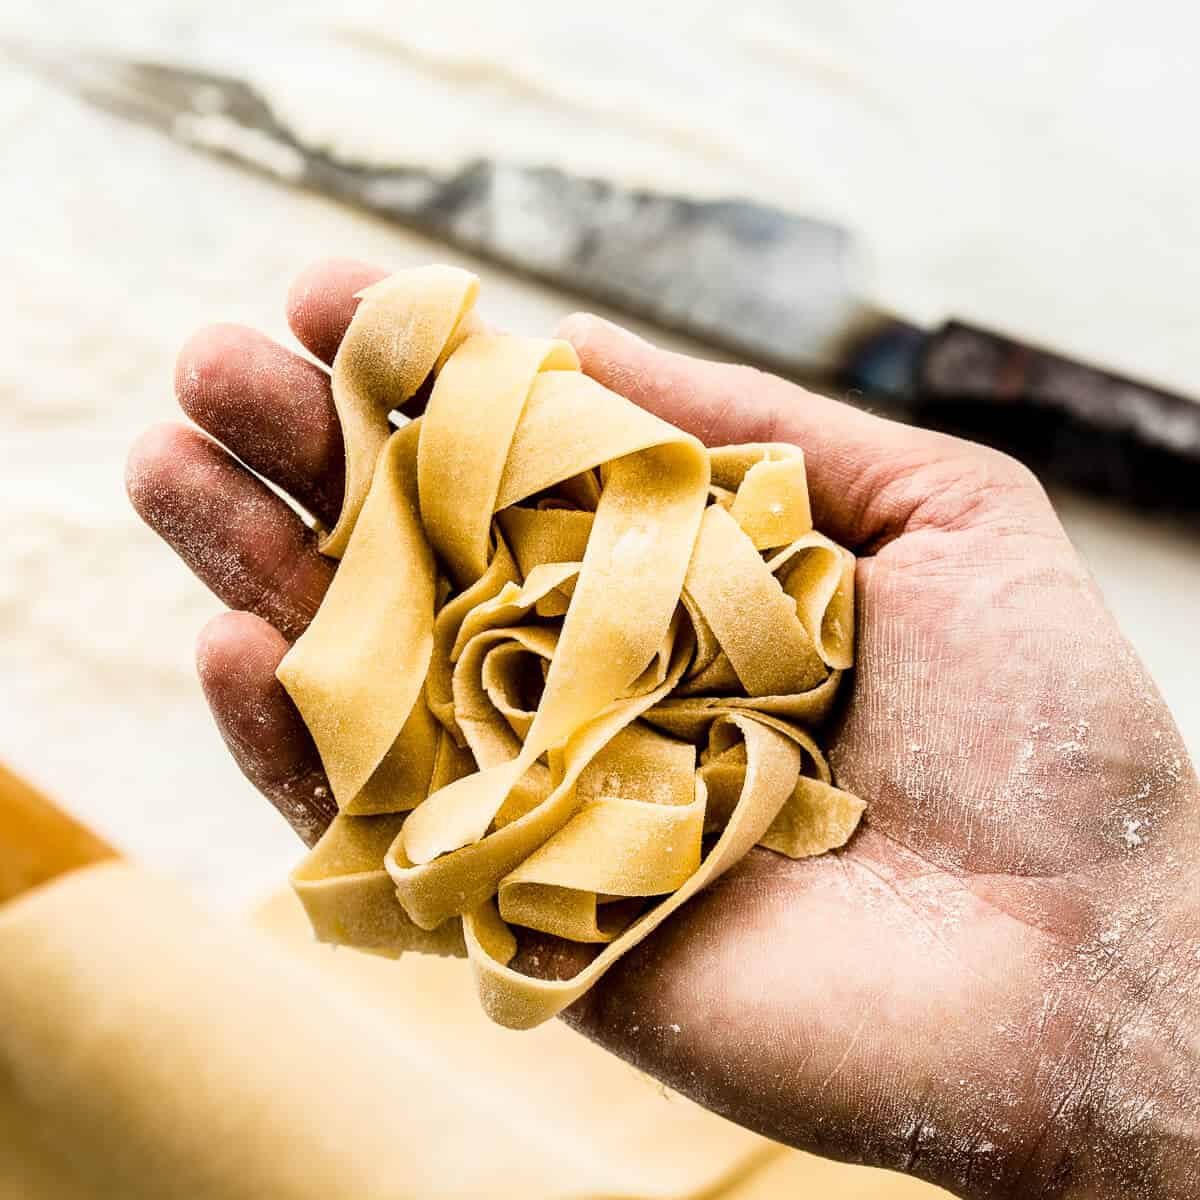 How to Make Fresh Homemade Pasta